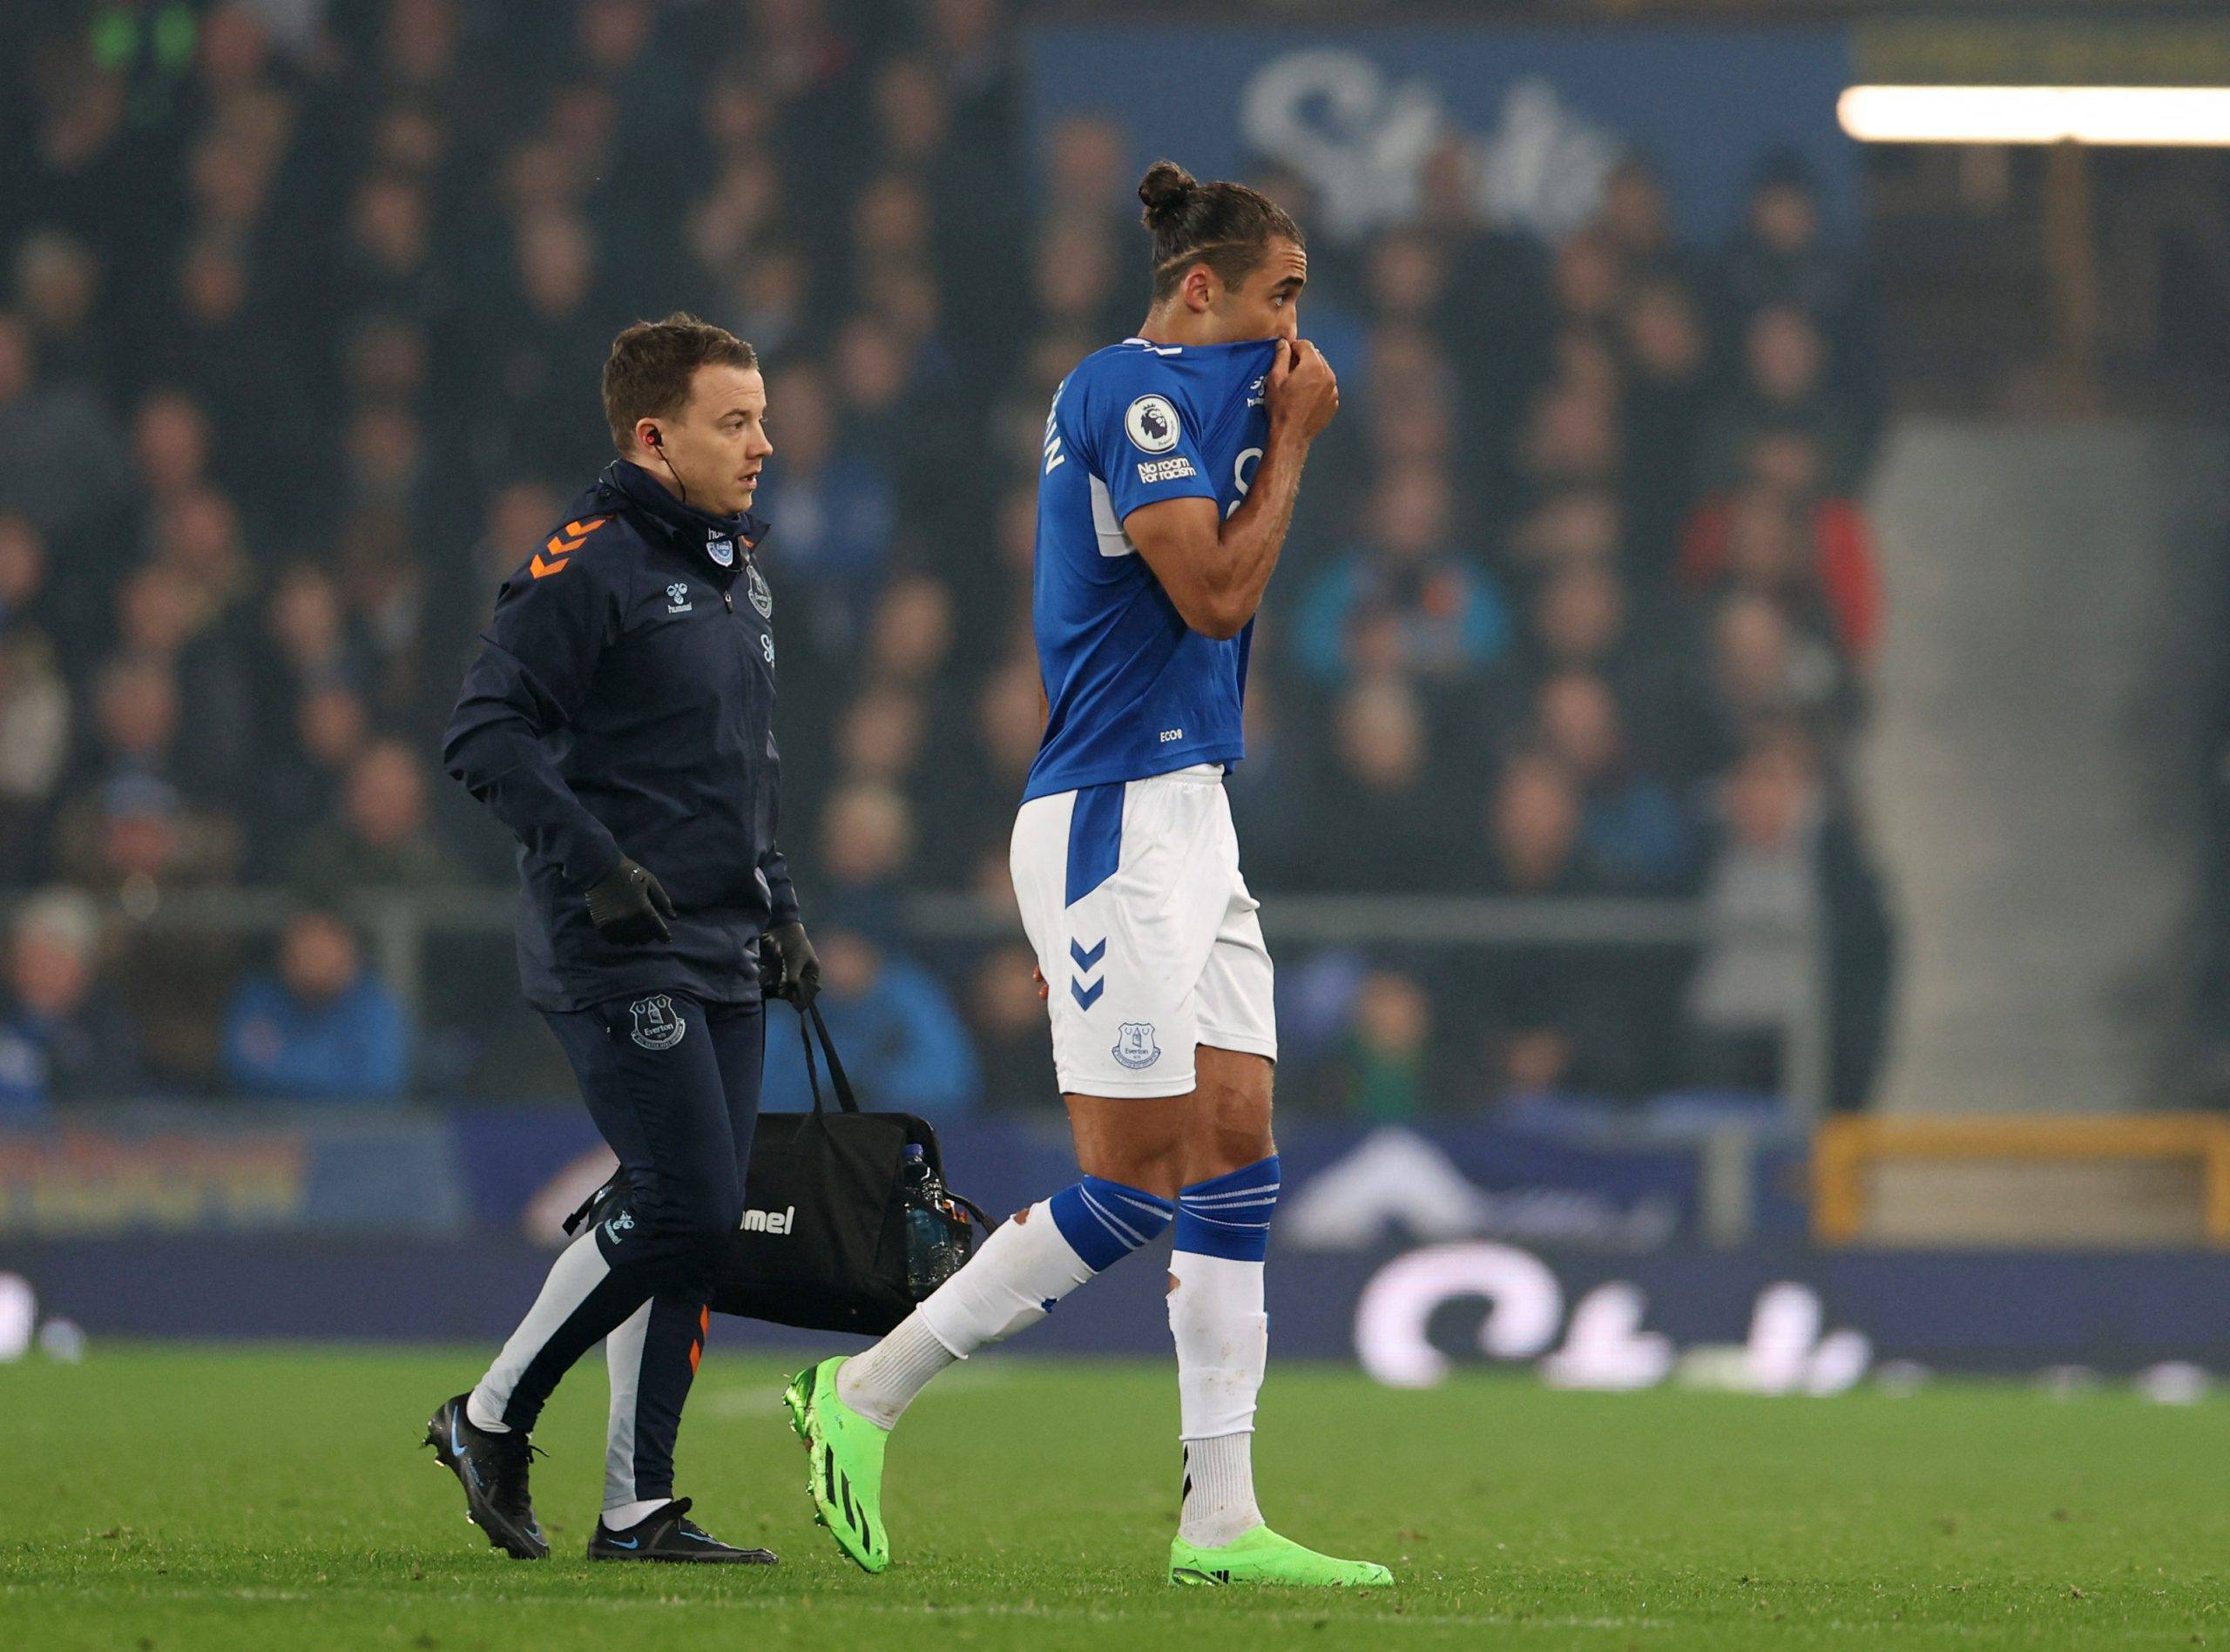 Everton: Dominic Calvert-Lewin's latest injury a 'big blow' - Everton News